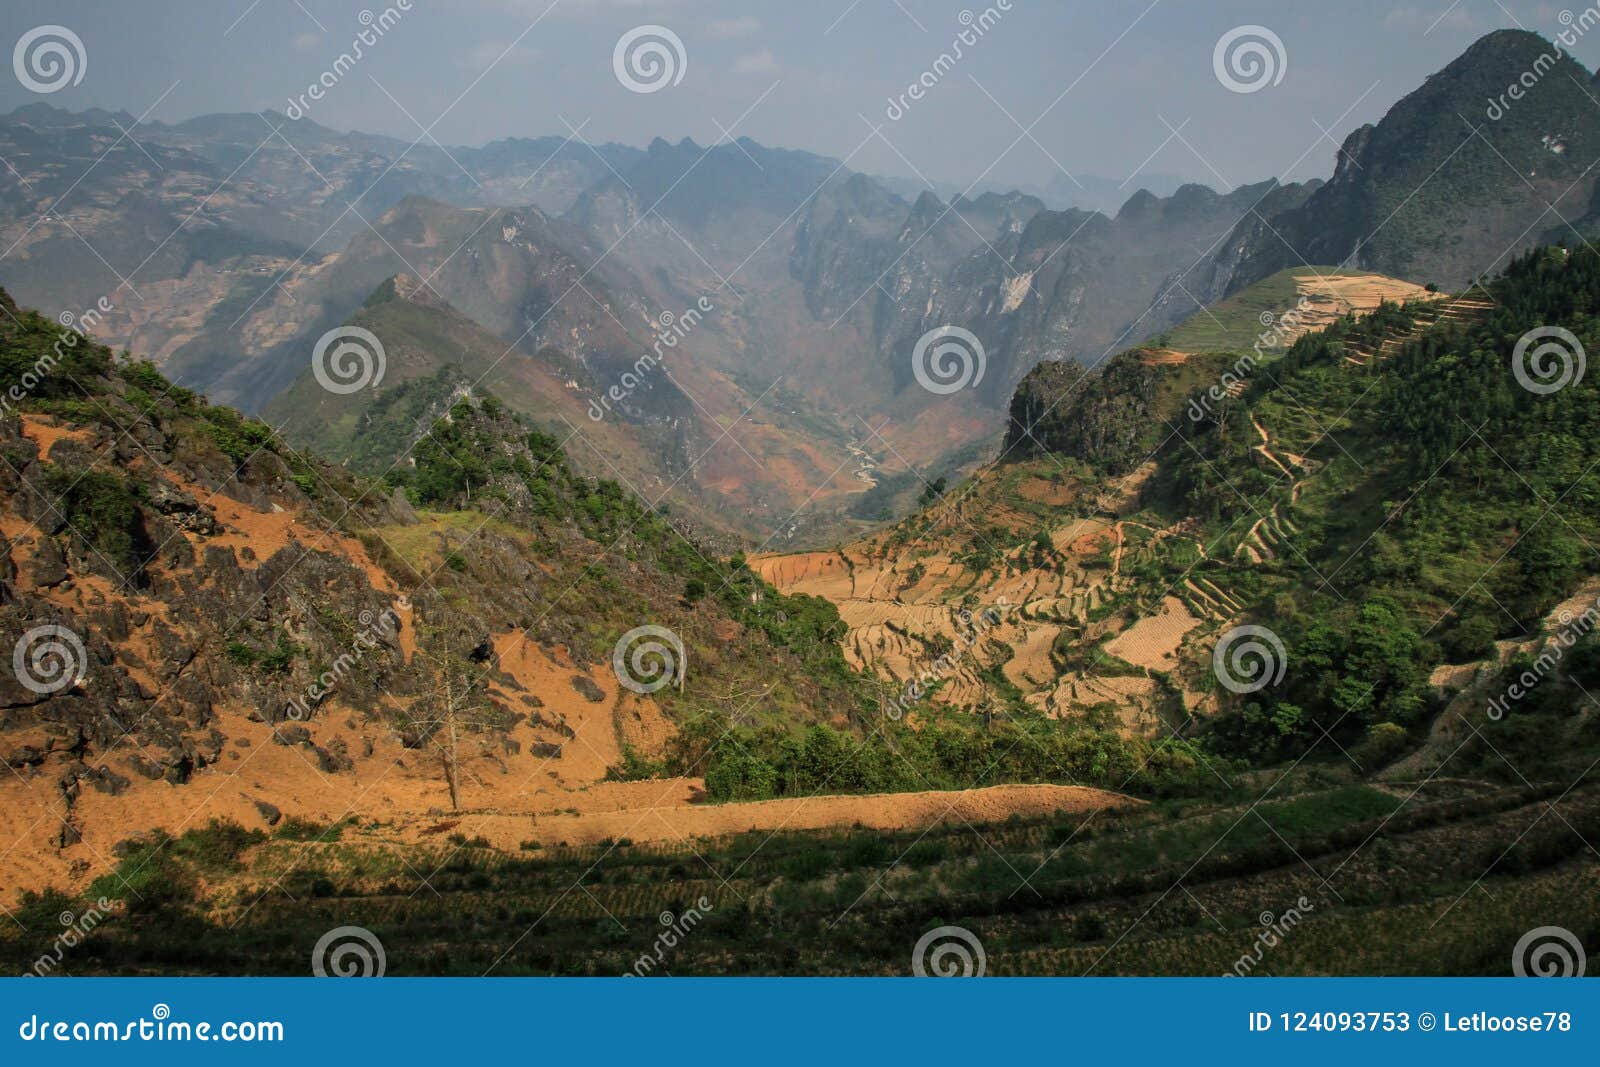 the majestic karst mountains around meo vac, ha giang province, vietnam